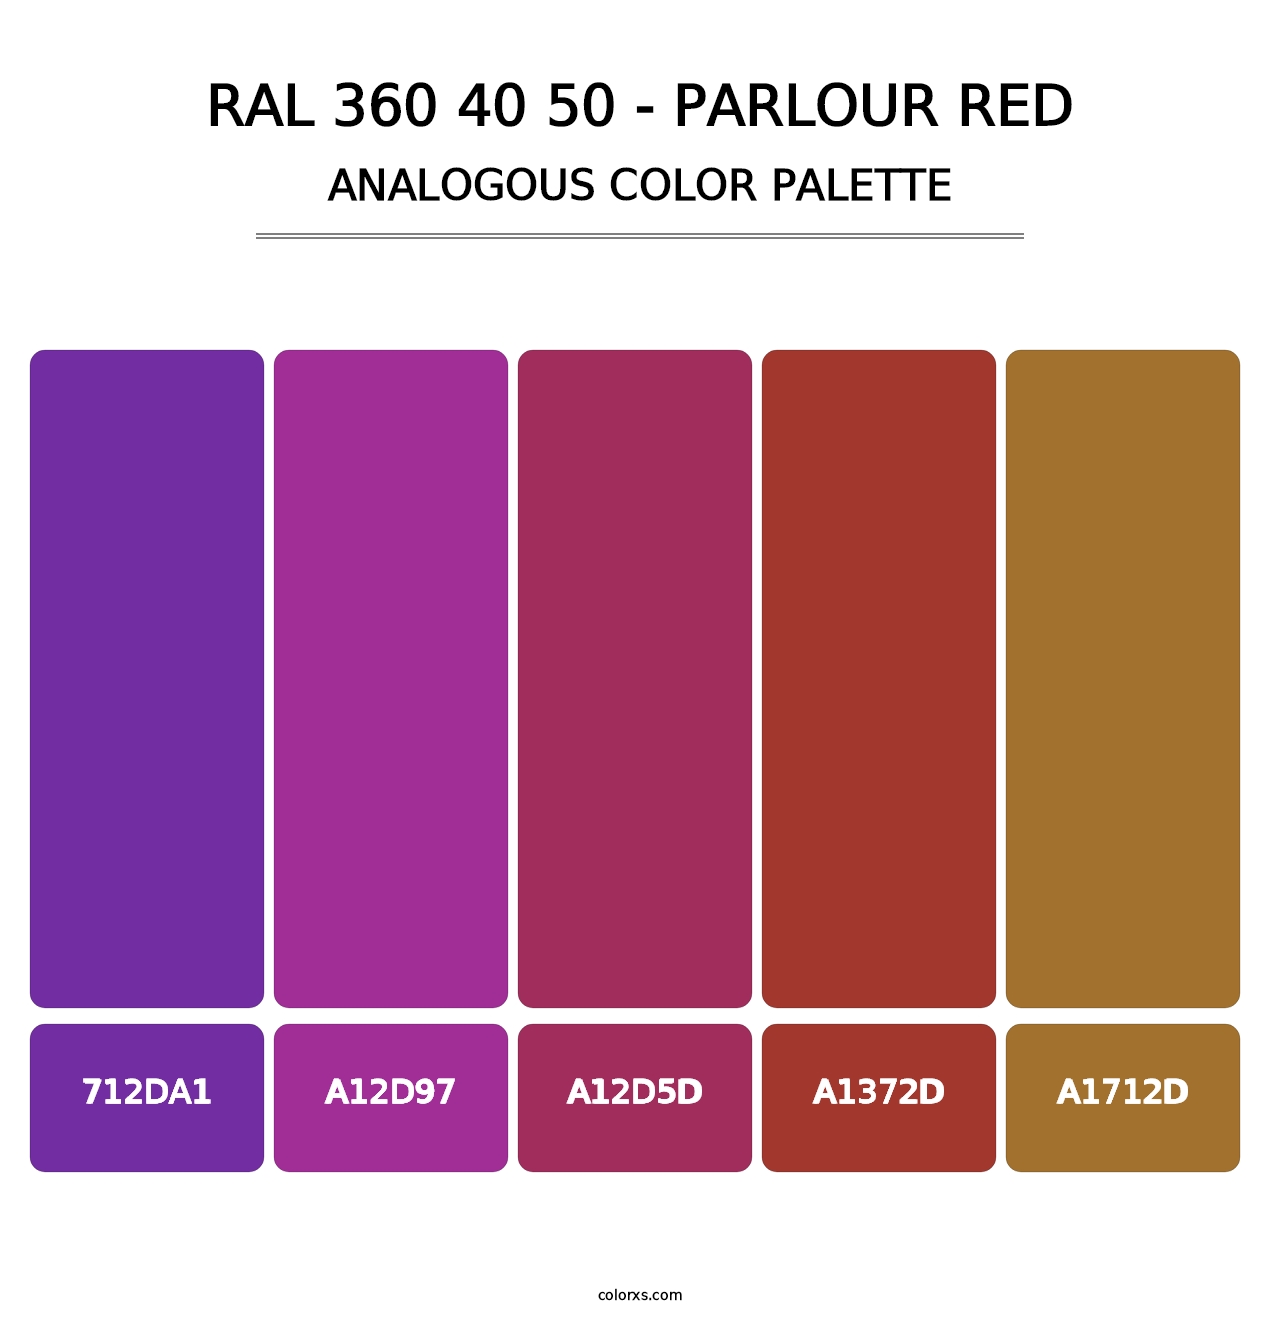 RAL 360 40 50 - Parlour Red - Analogous Color Palette